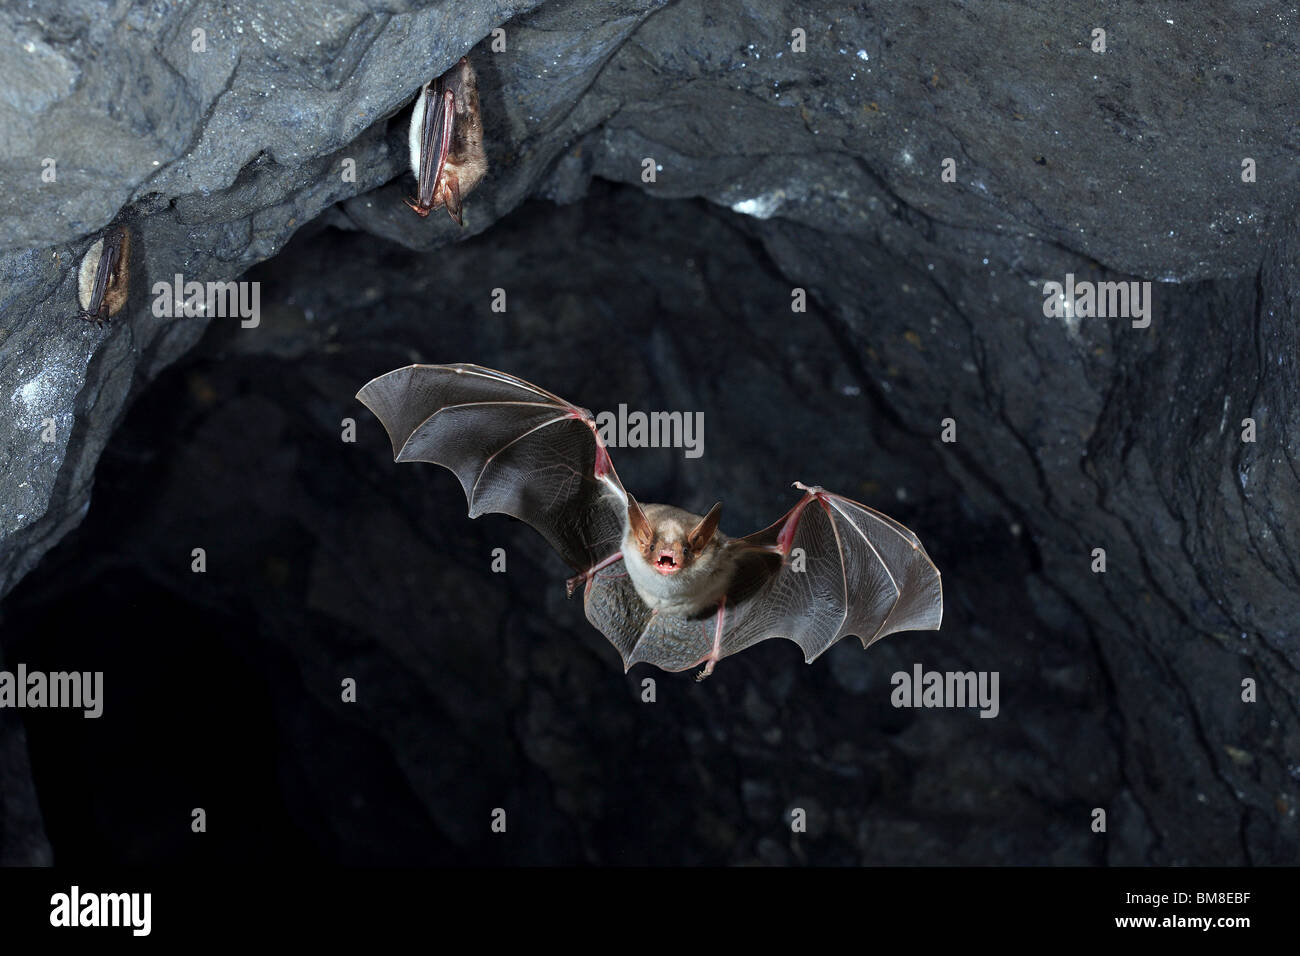 Greater Mouse-eared Bat (Myotis myotis) in flight in winter shelter. Stock Photo